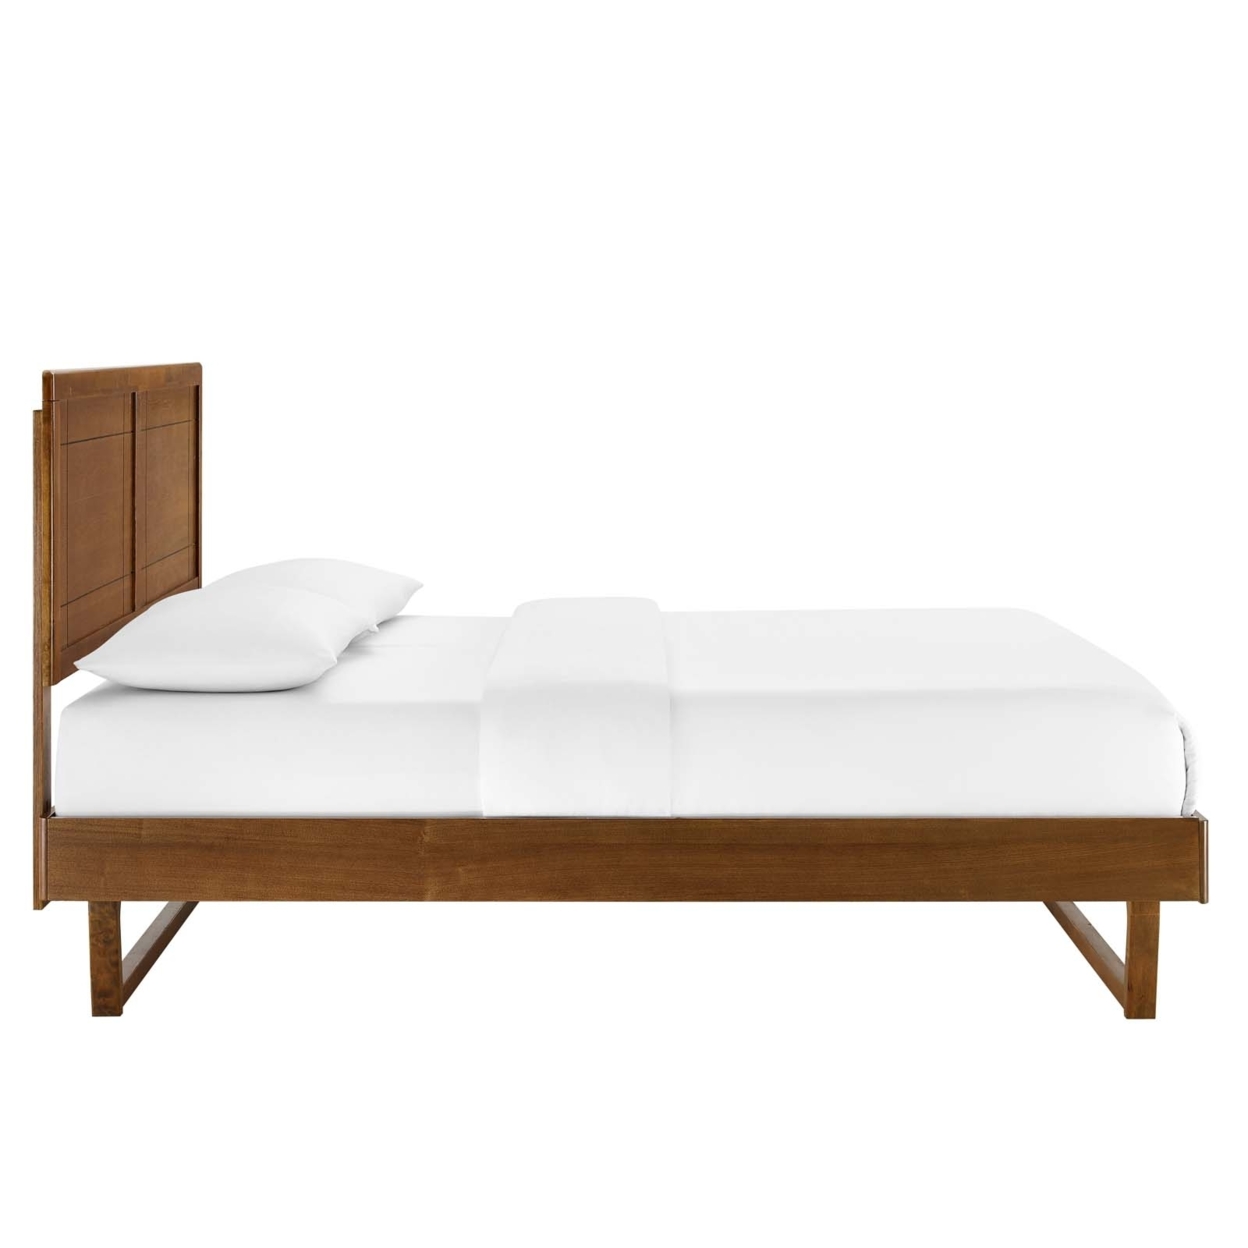 Marlee Full Wood Platform Bed With Angular Frame, Walnut